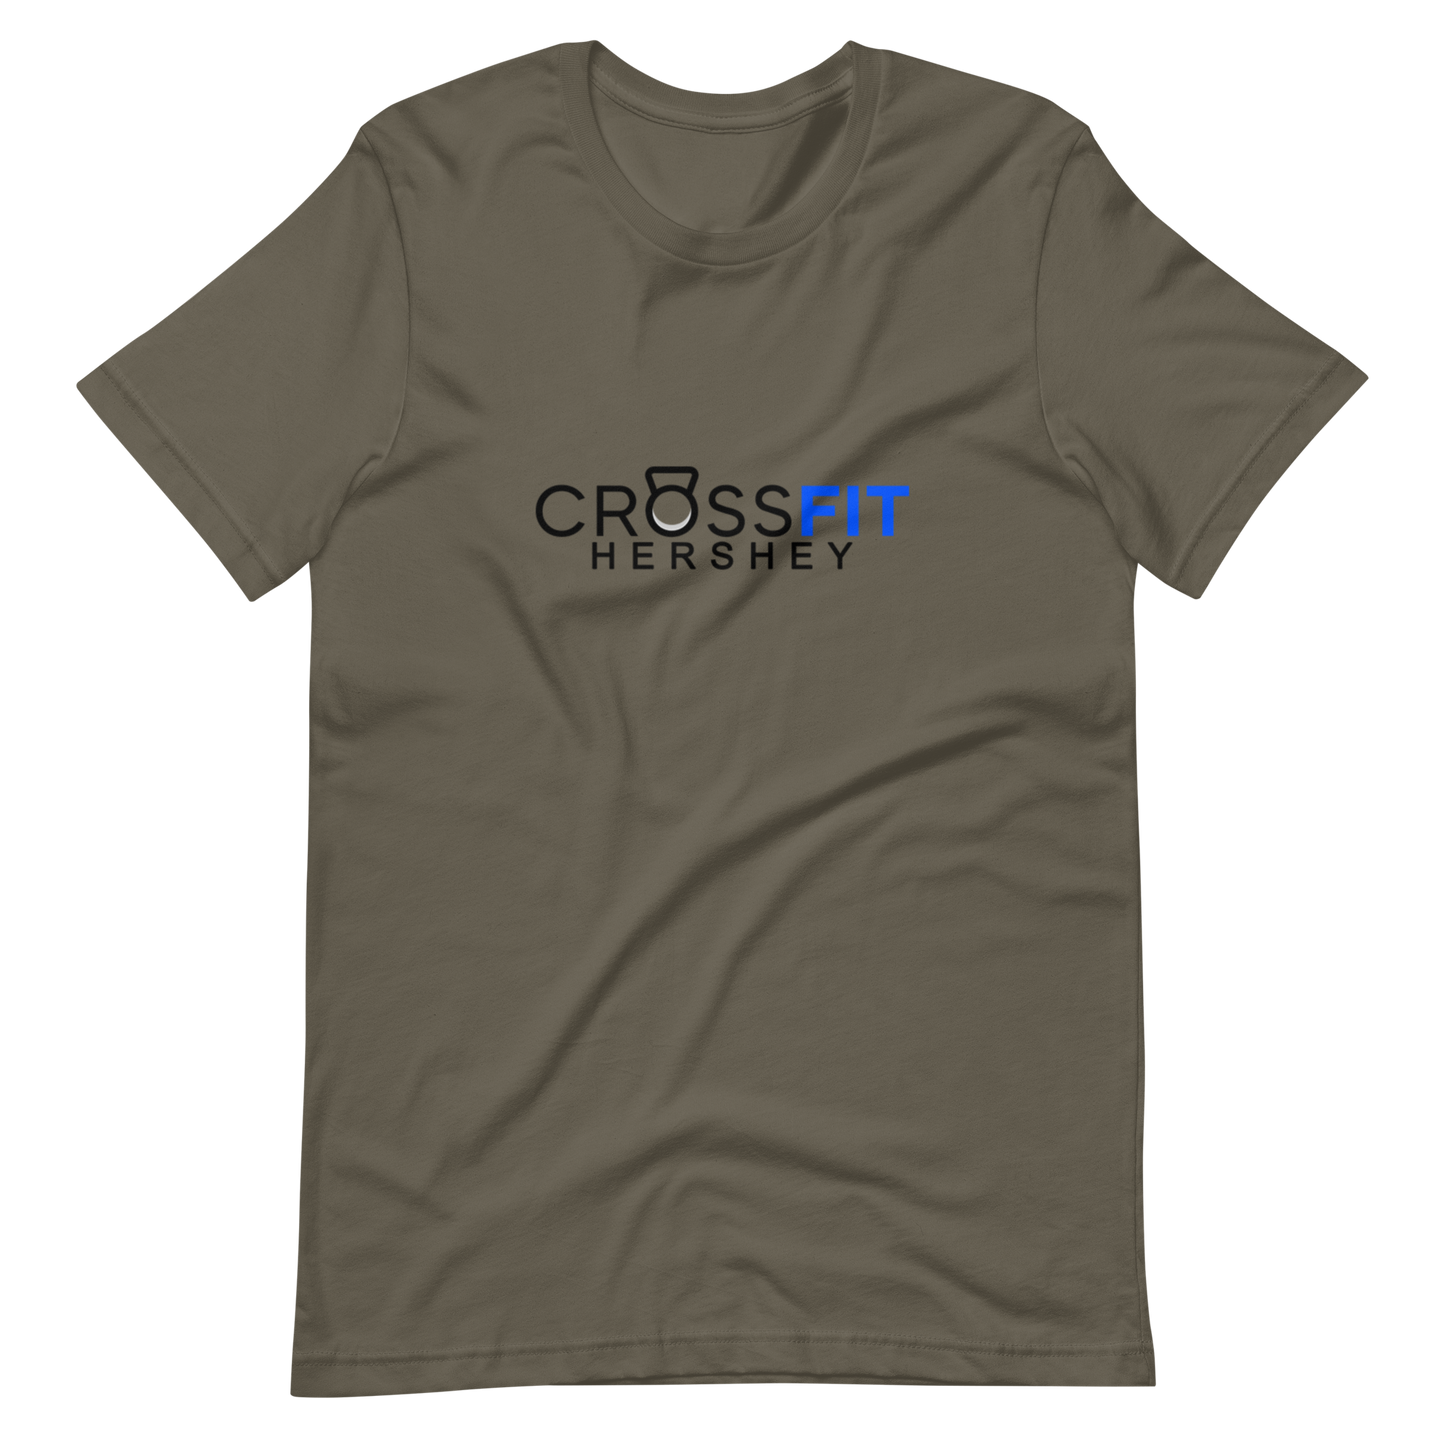 CrossFit Hershey Unisex t-shirt